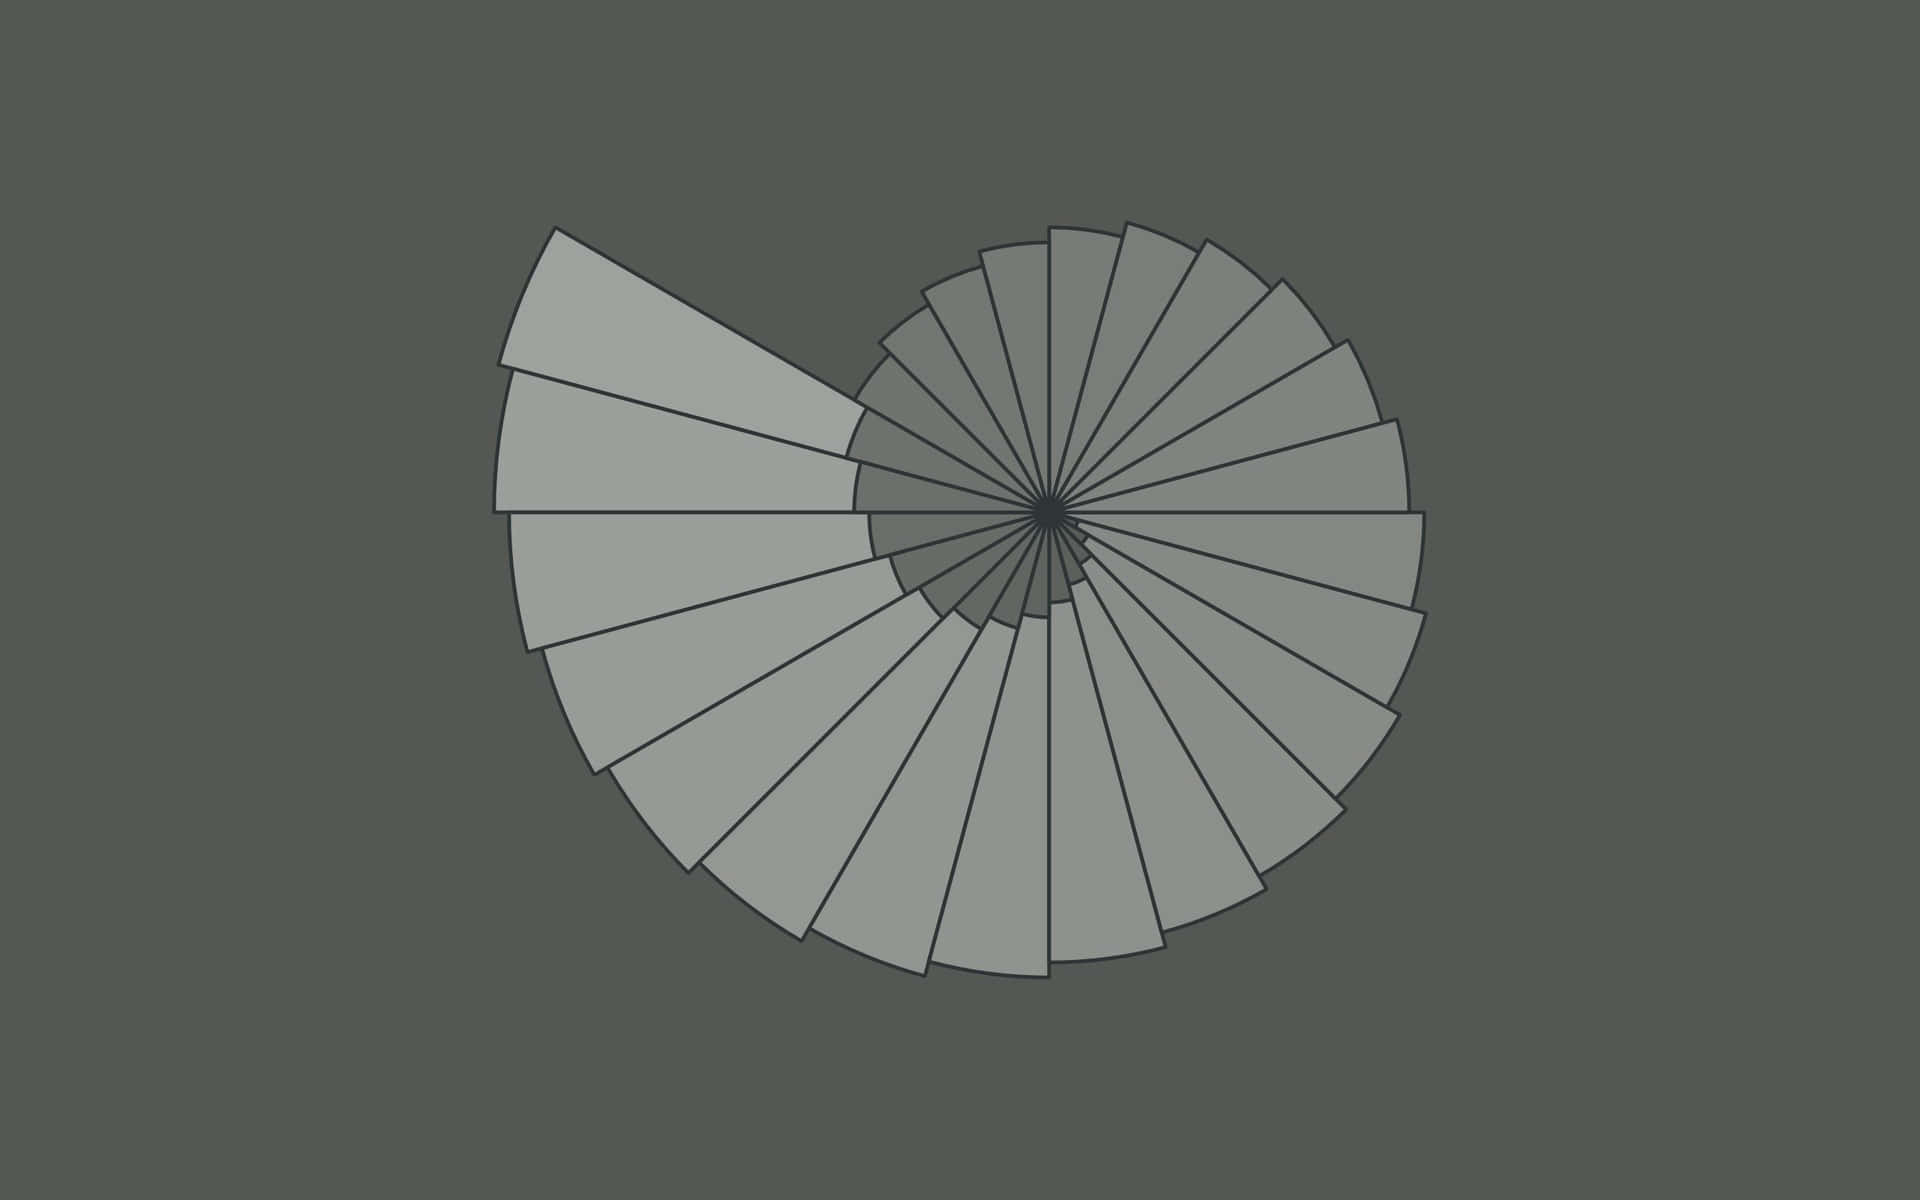 Fibonaccifolge-treppen Grauer Hintergrund